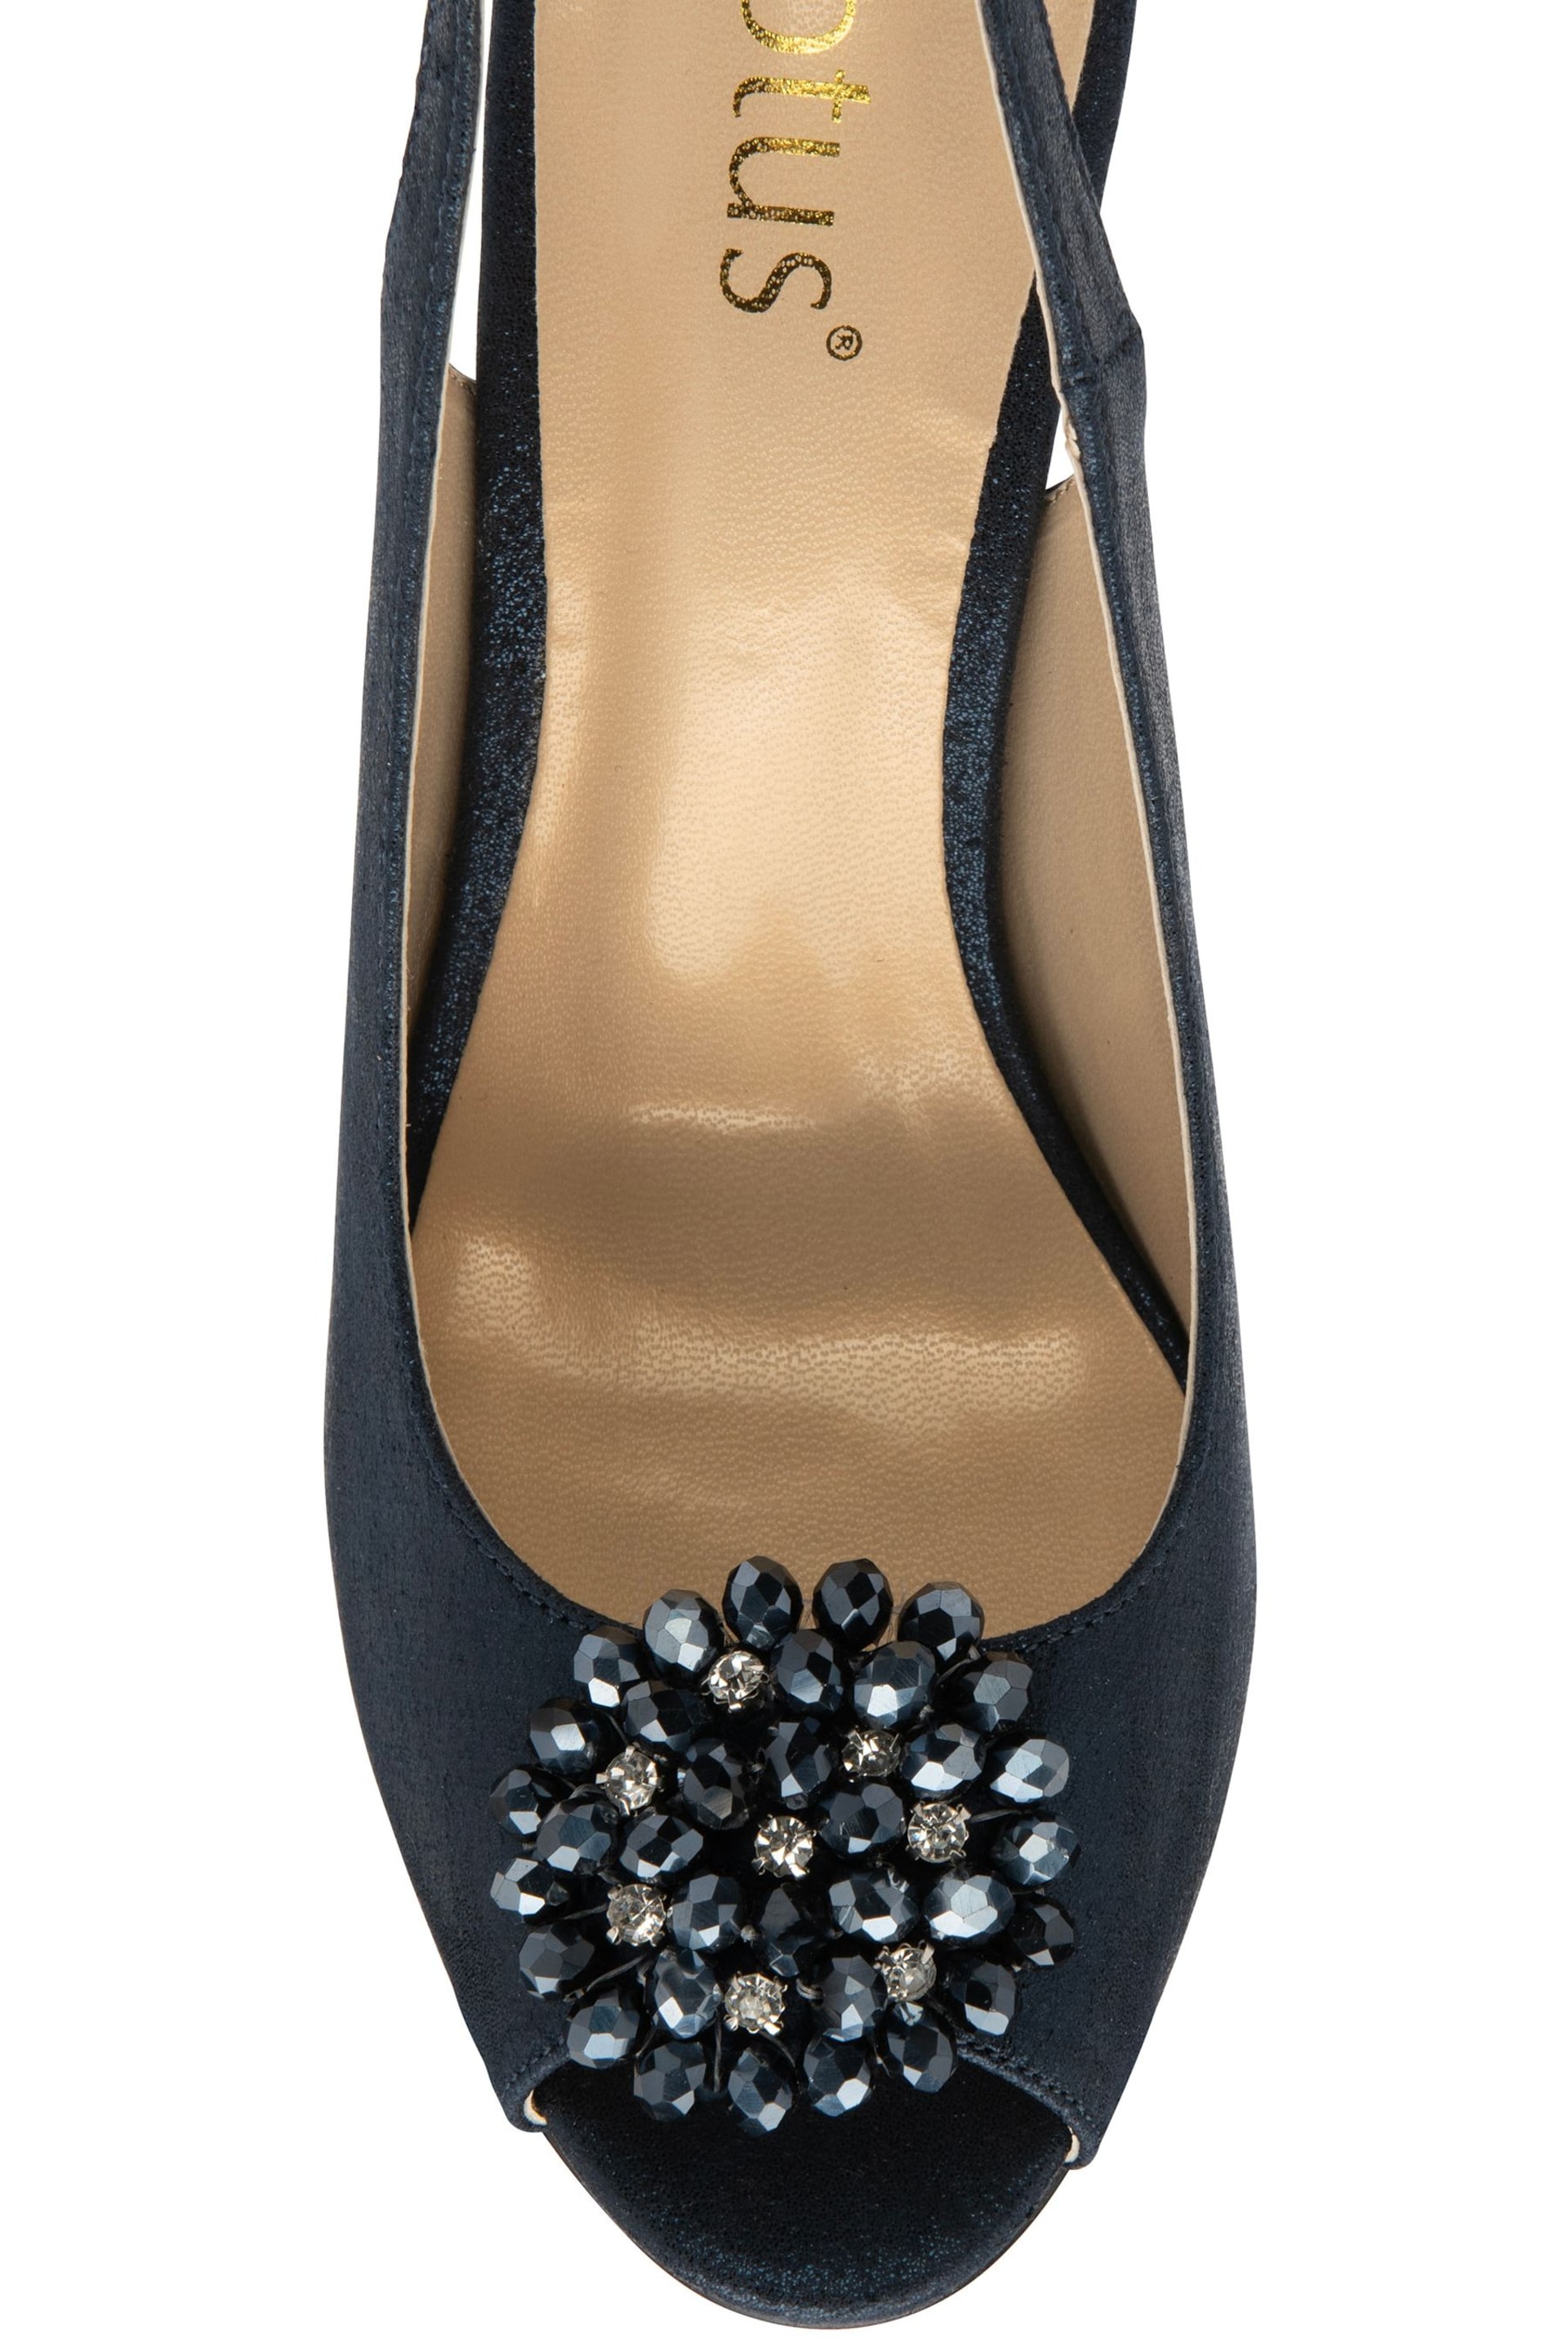 Lotus Blue Peep-Toe Slingback Shoes - Image 4 of 4